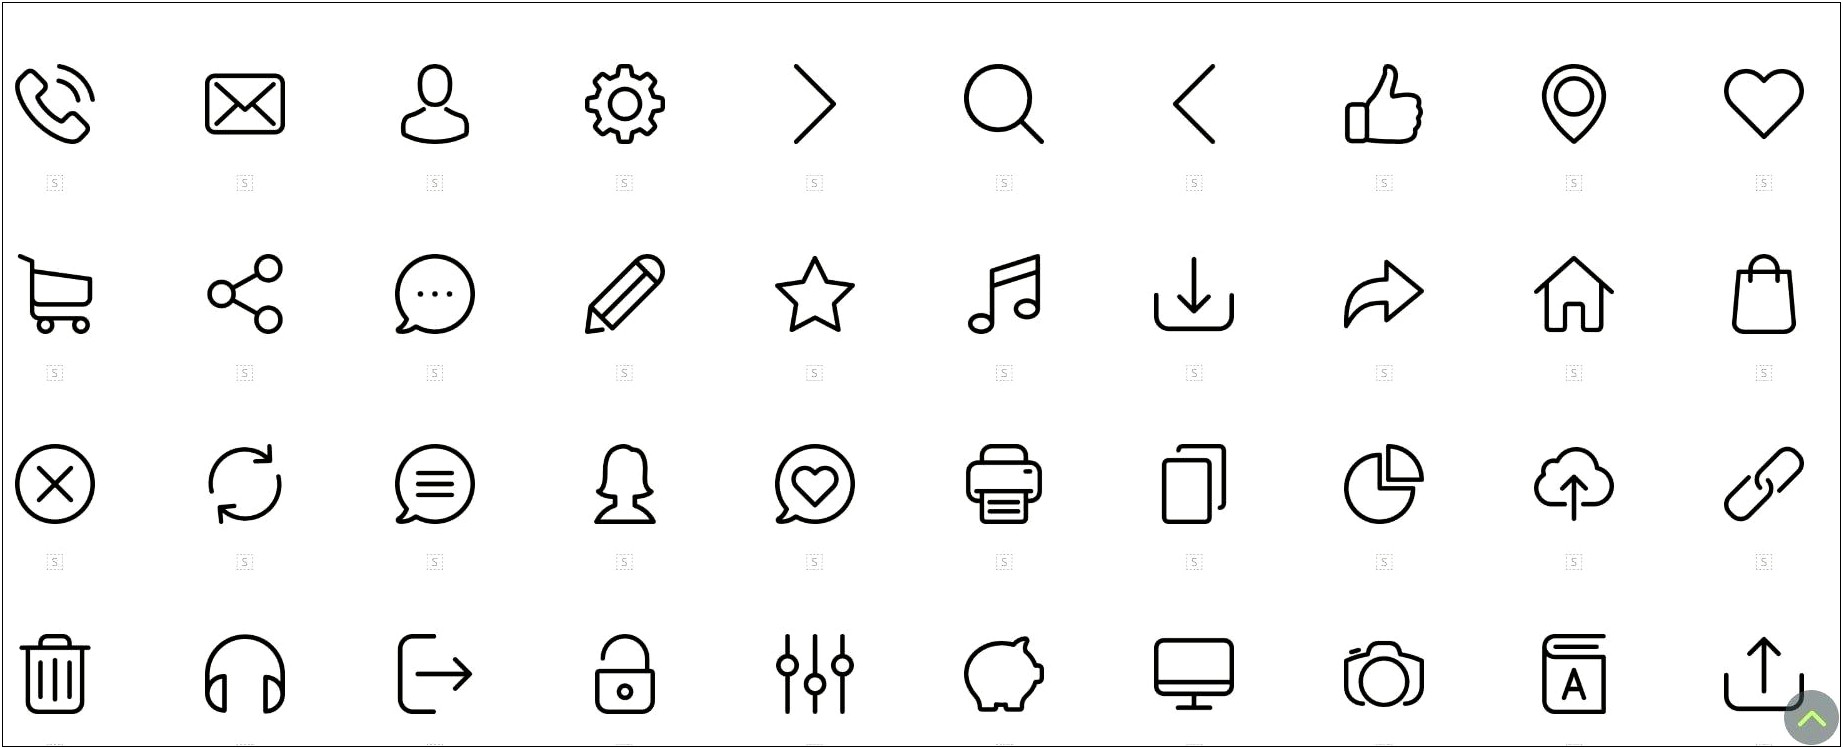 Free Icons For Resume Jpeg